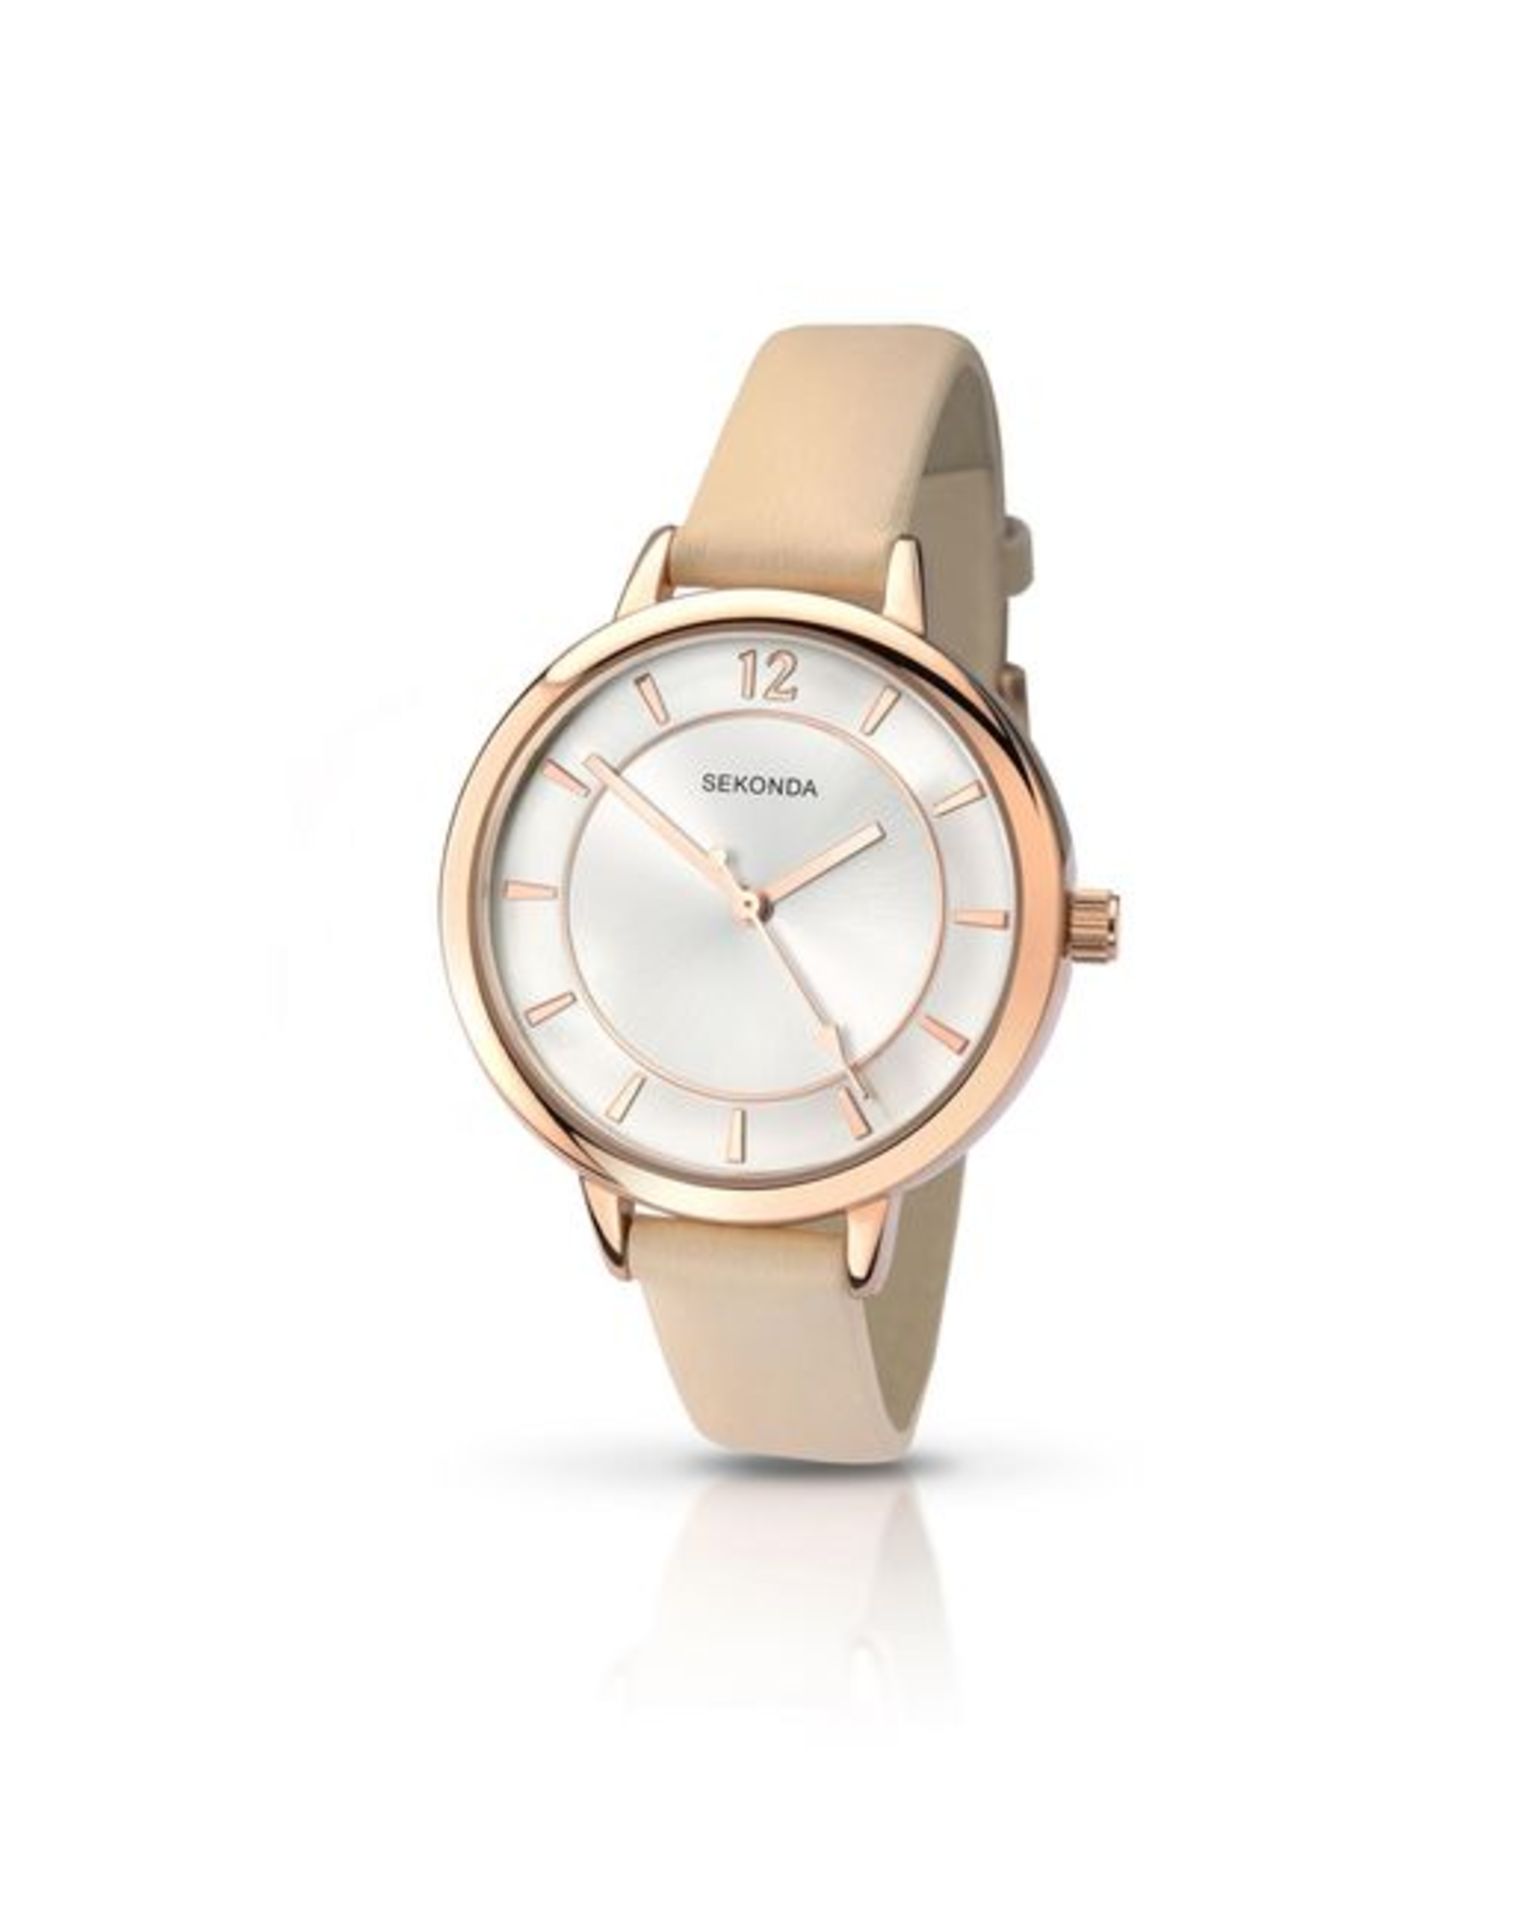 5 x Brand New Sekonda Women's Quartz Watch with Analogue Display 2137.28